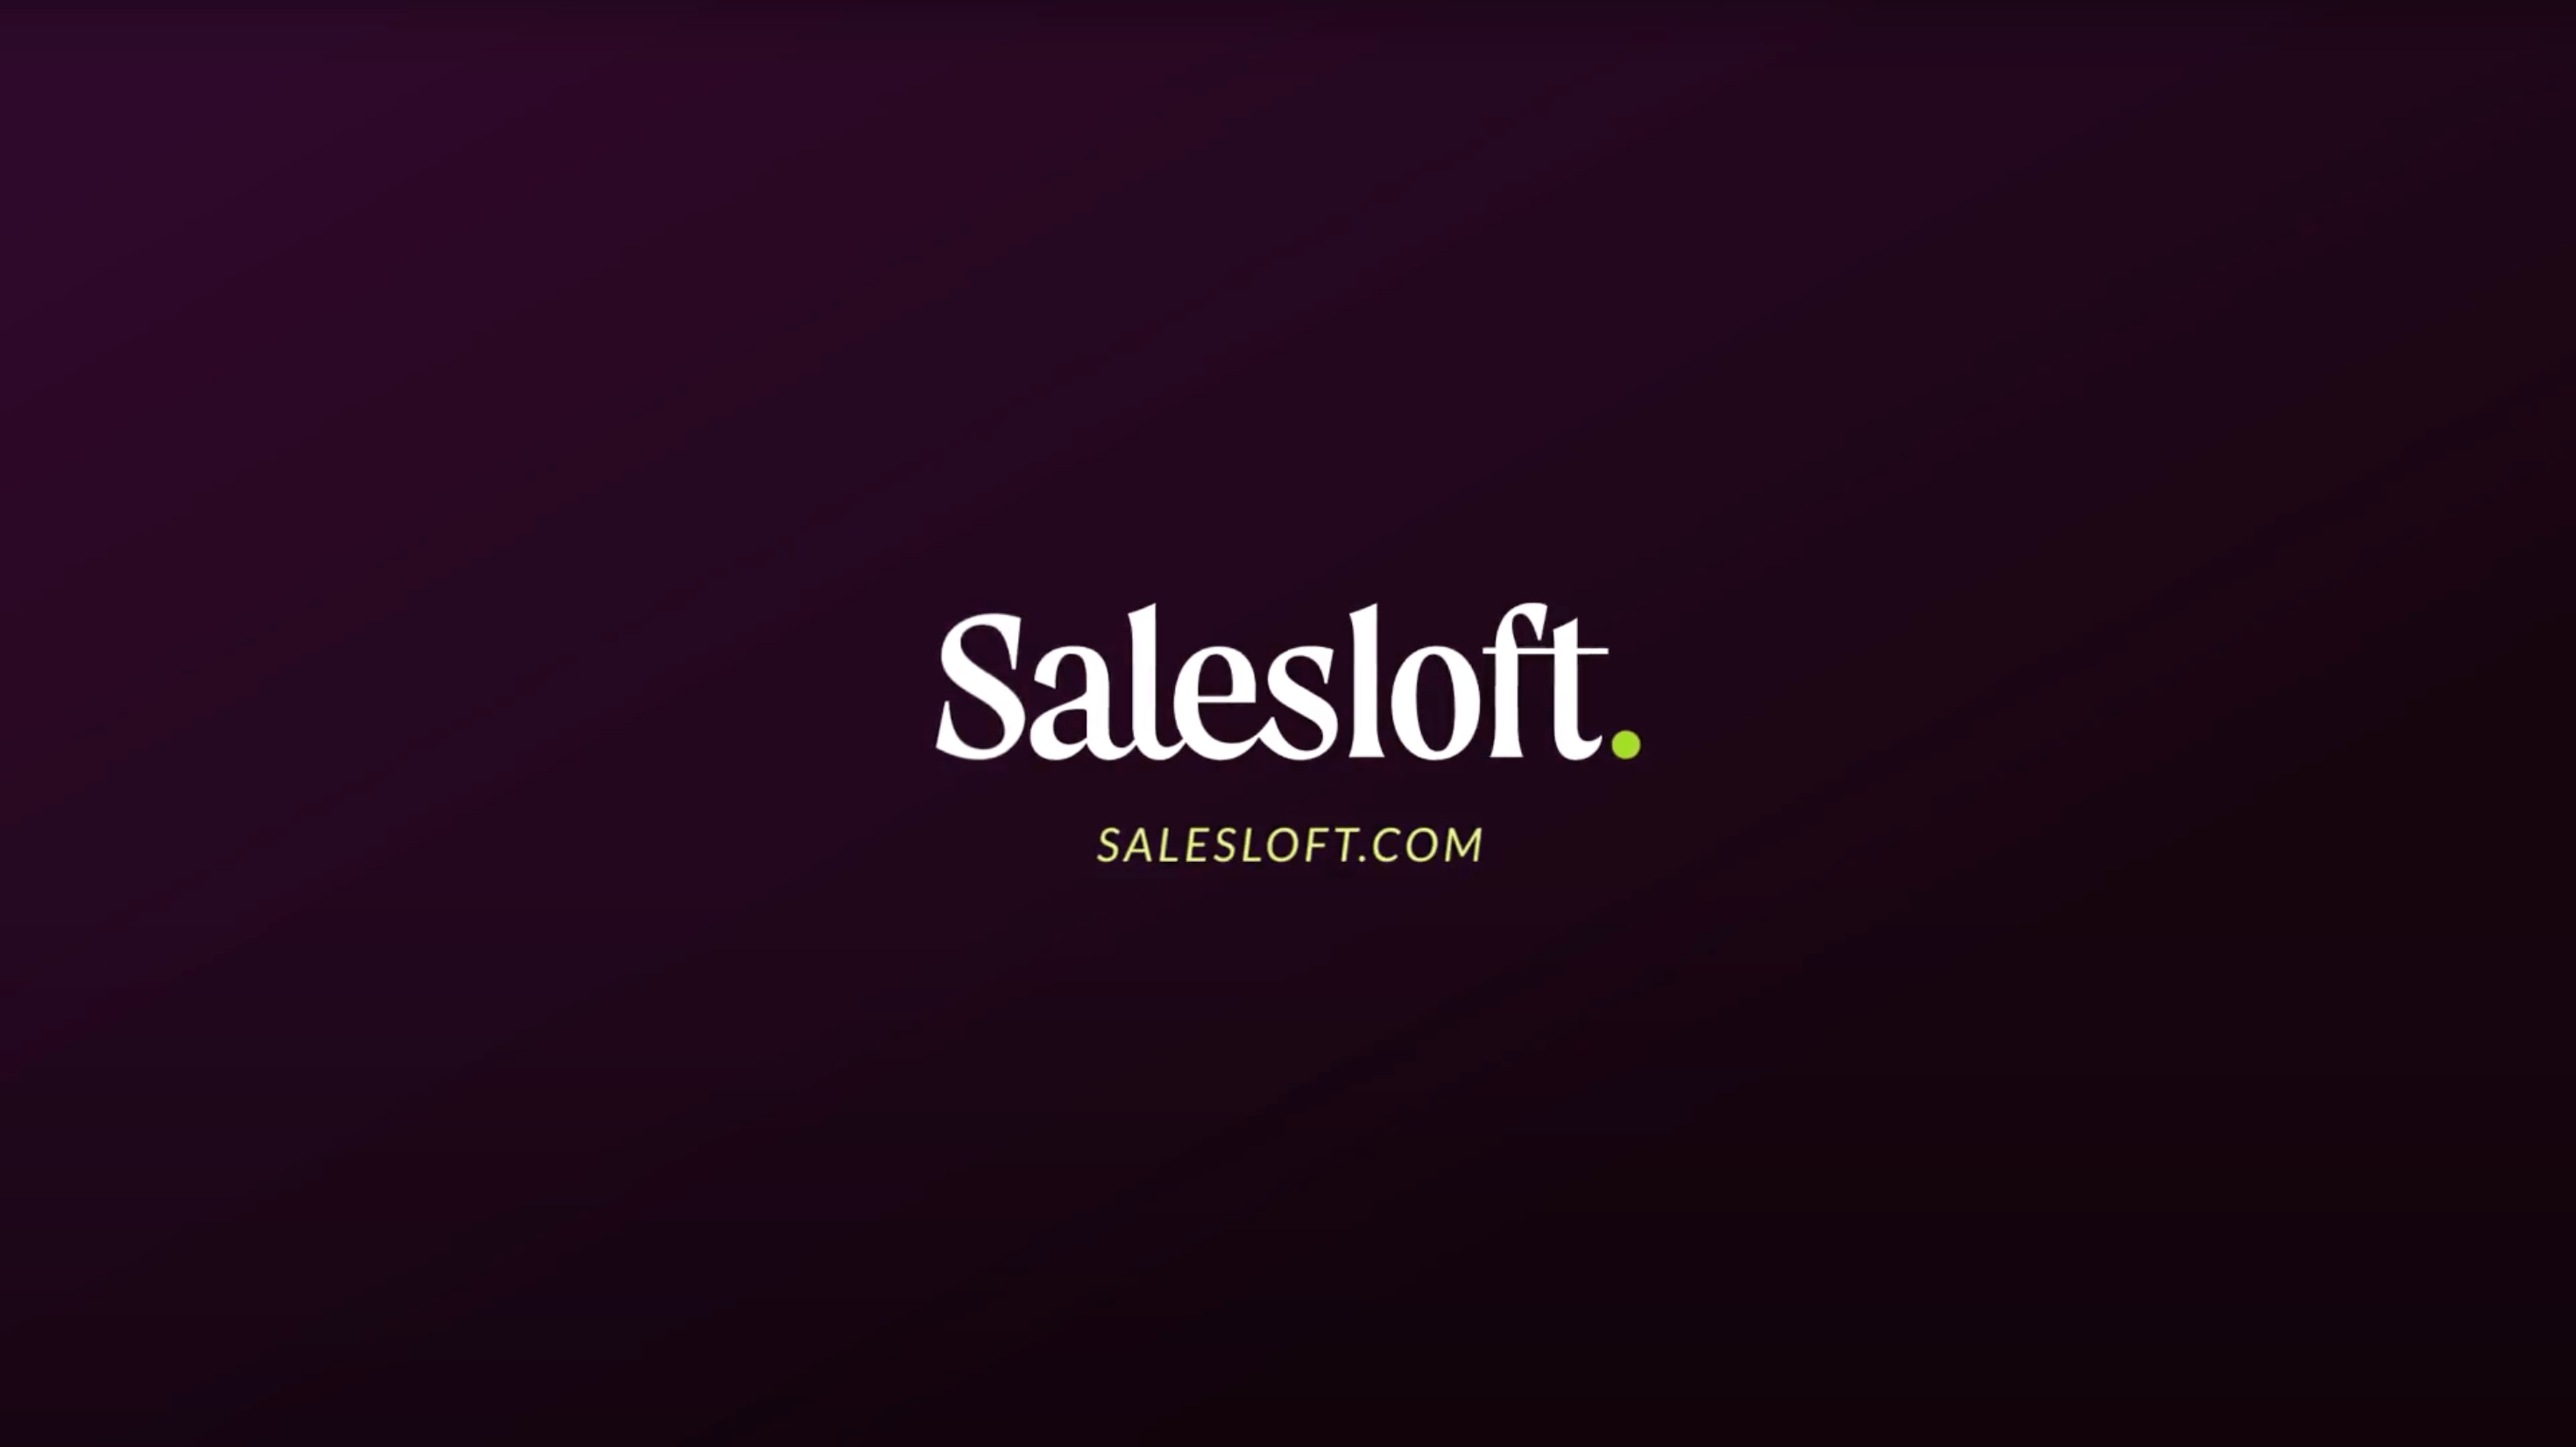 Salesloft // Thought Leadership